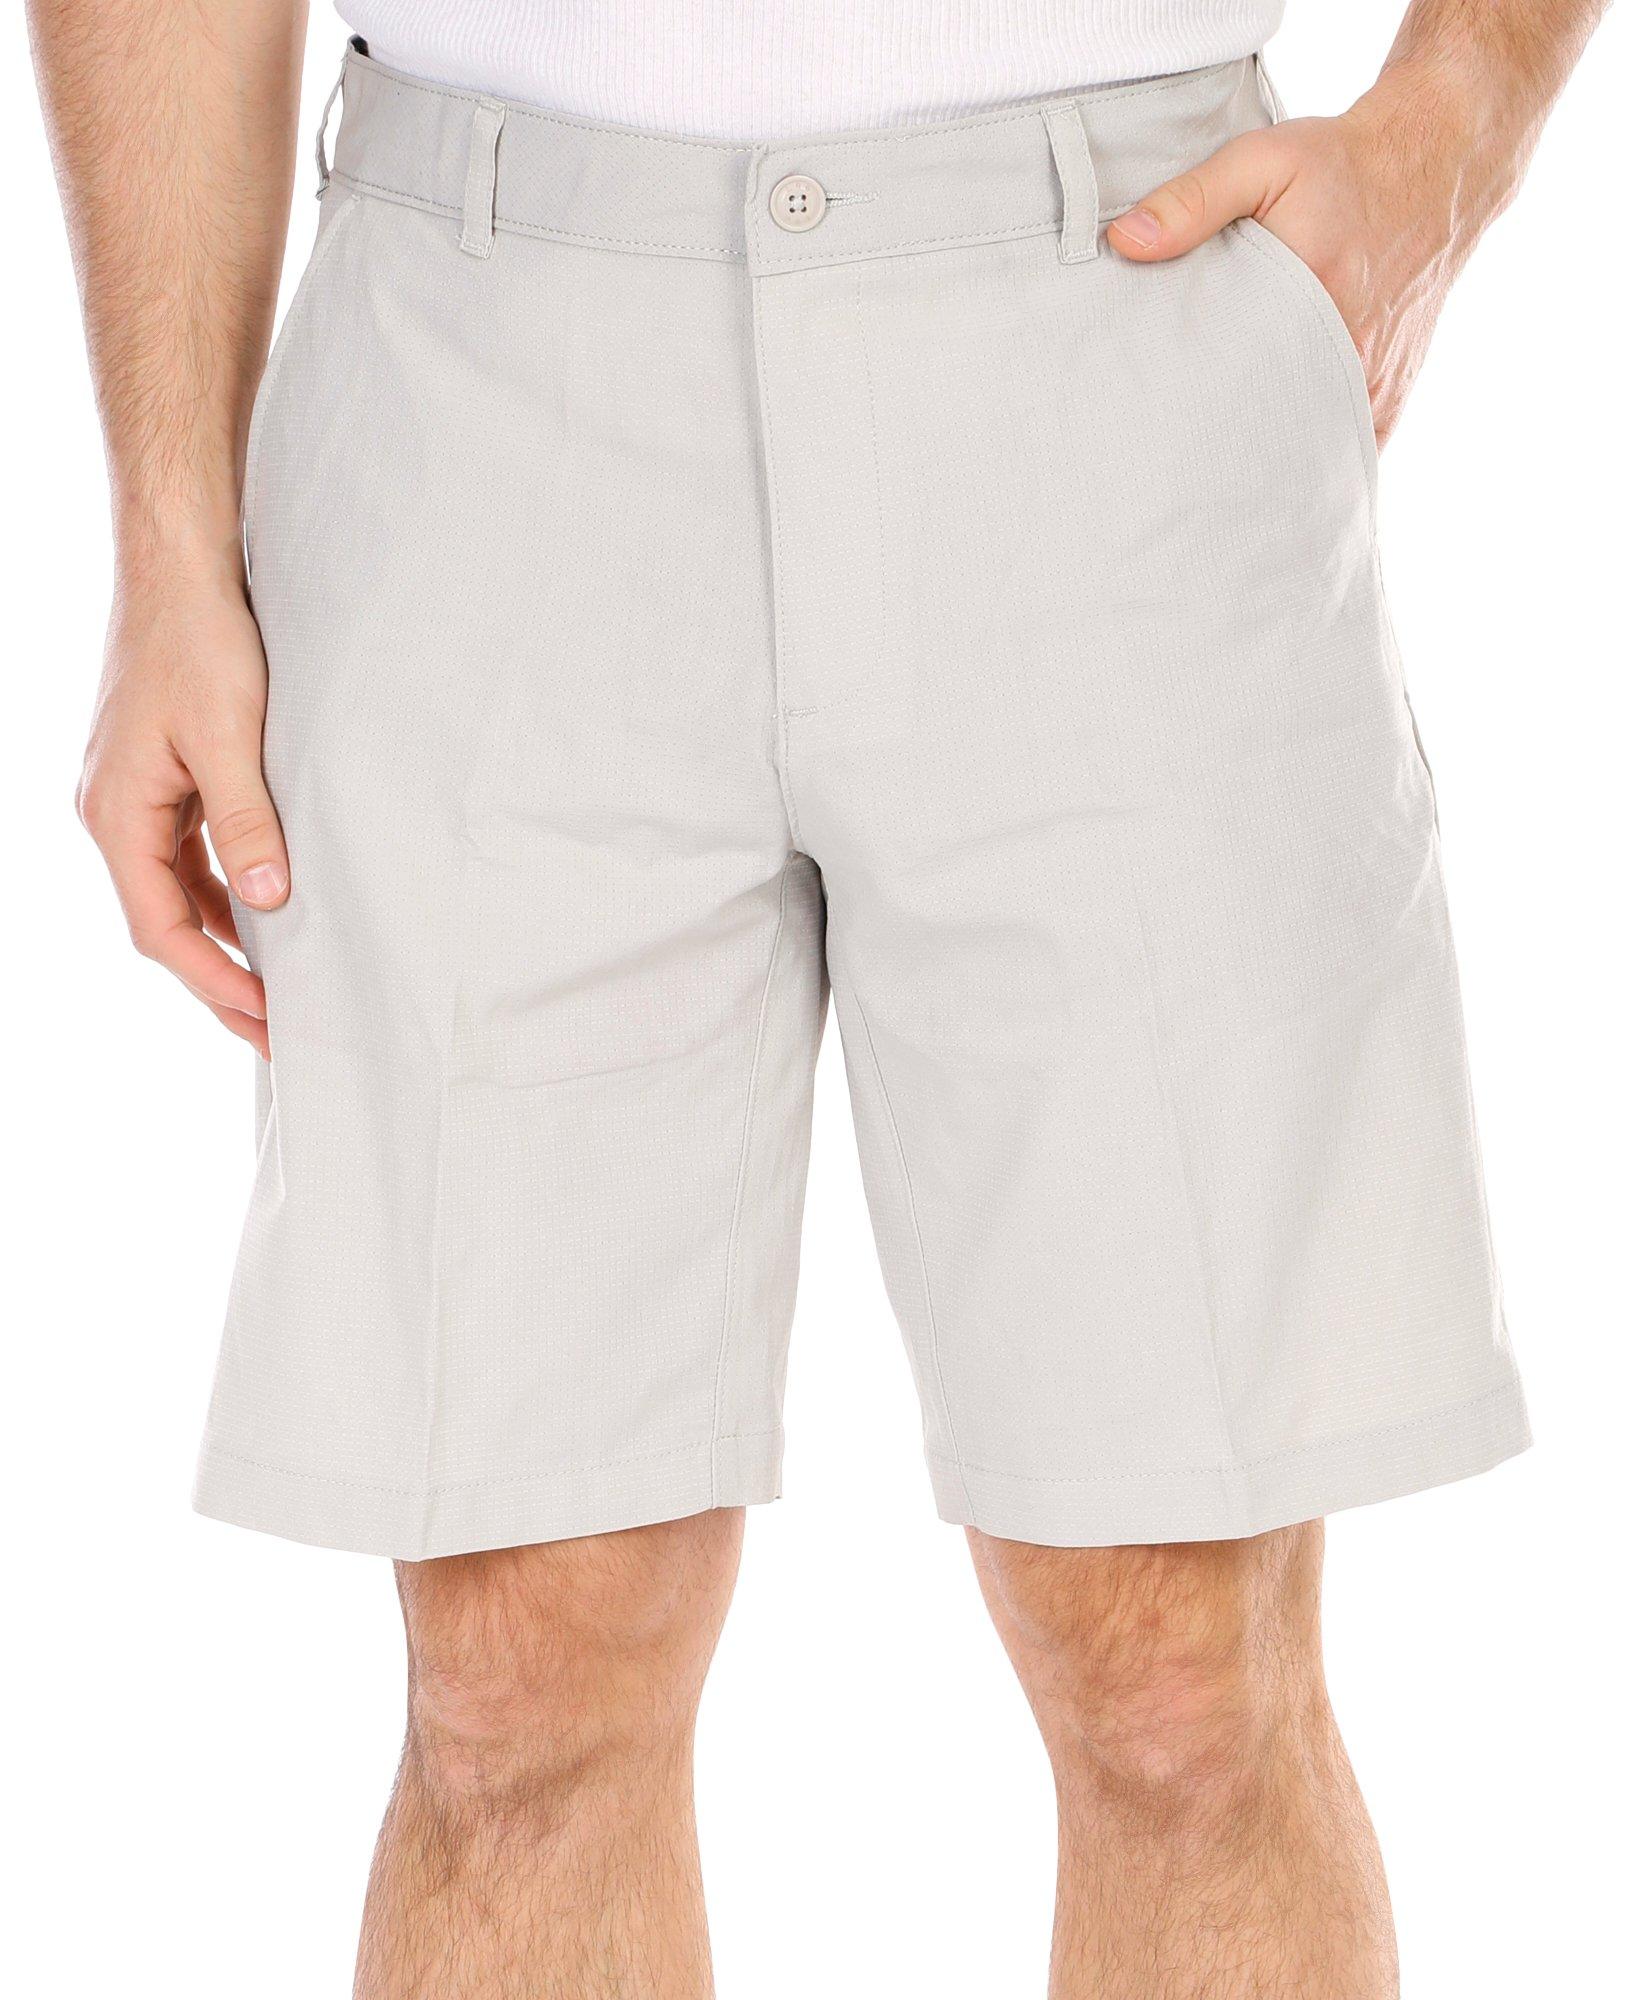 Men's Solid Shorts